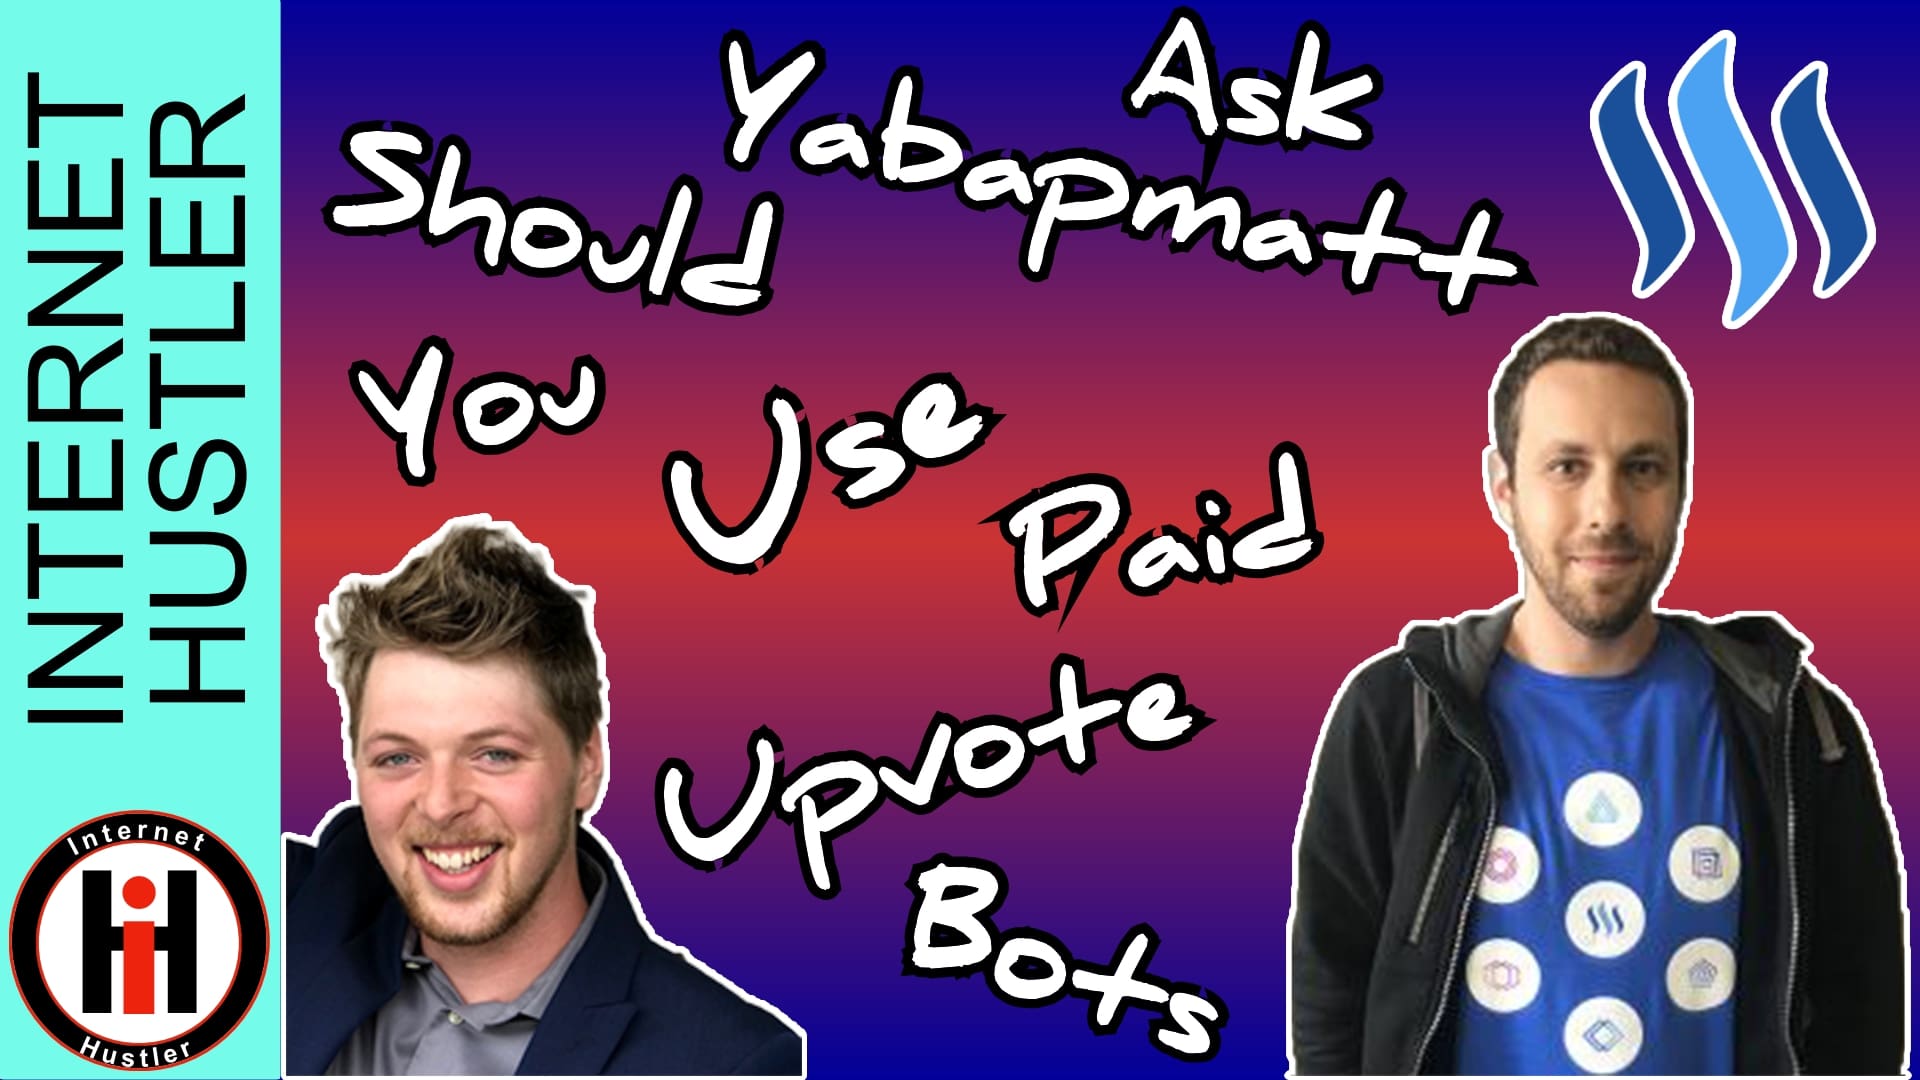 Should You Use Paid Voting Bots According To Yabapmatt